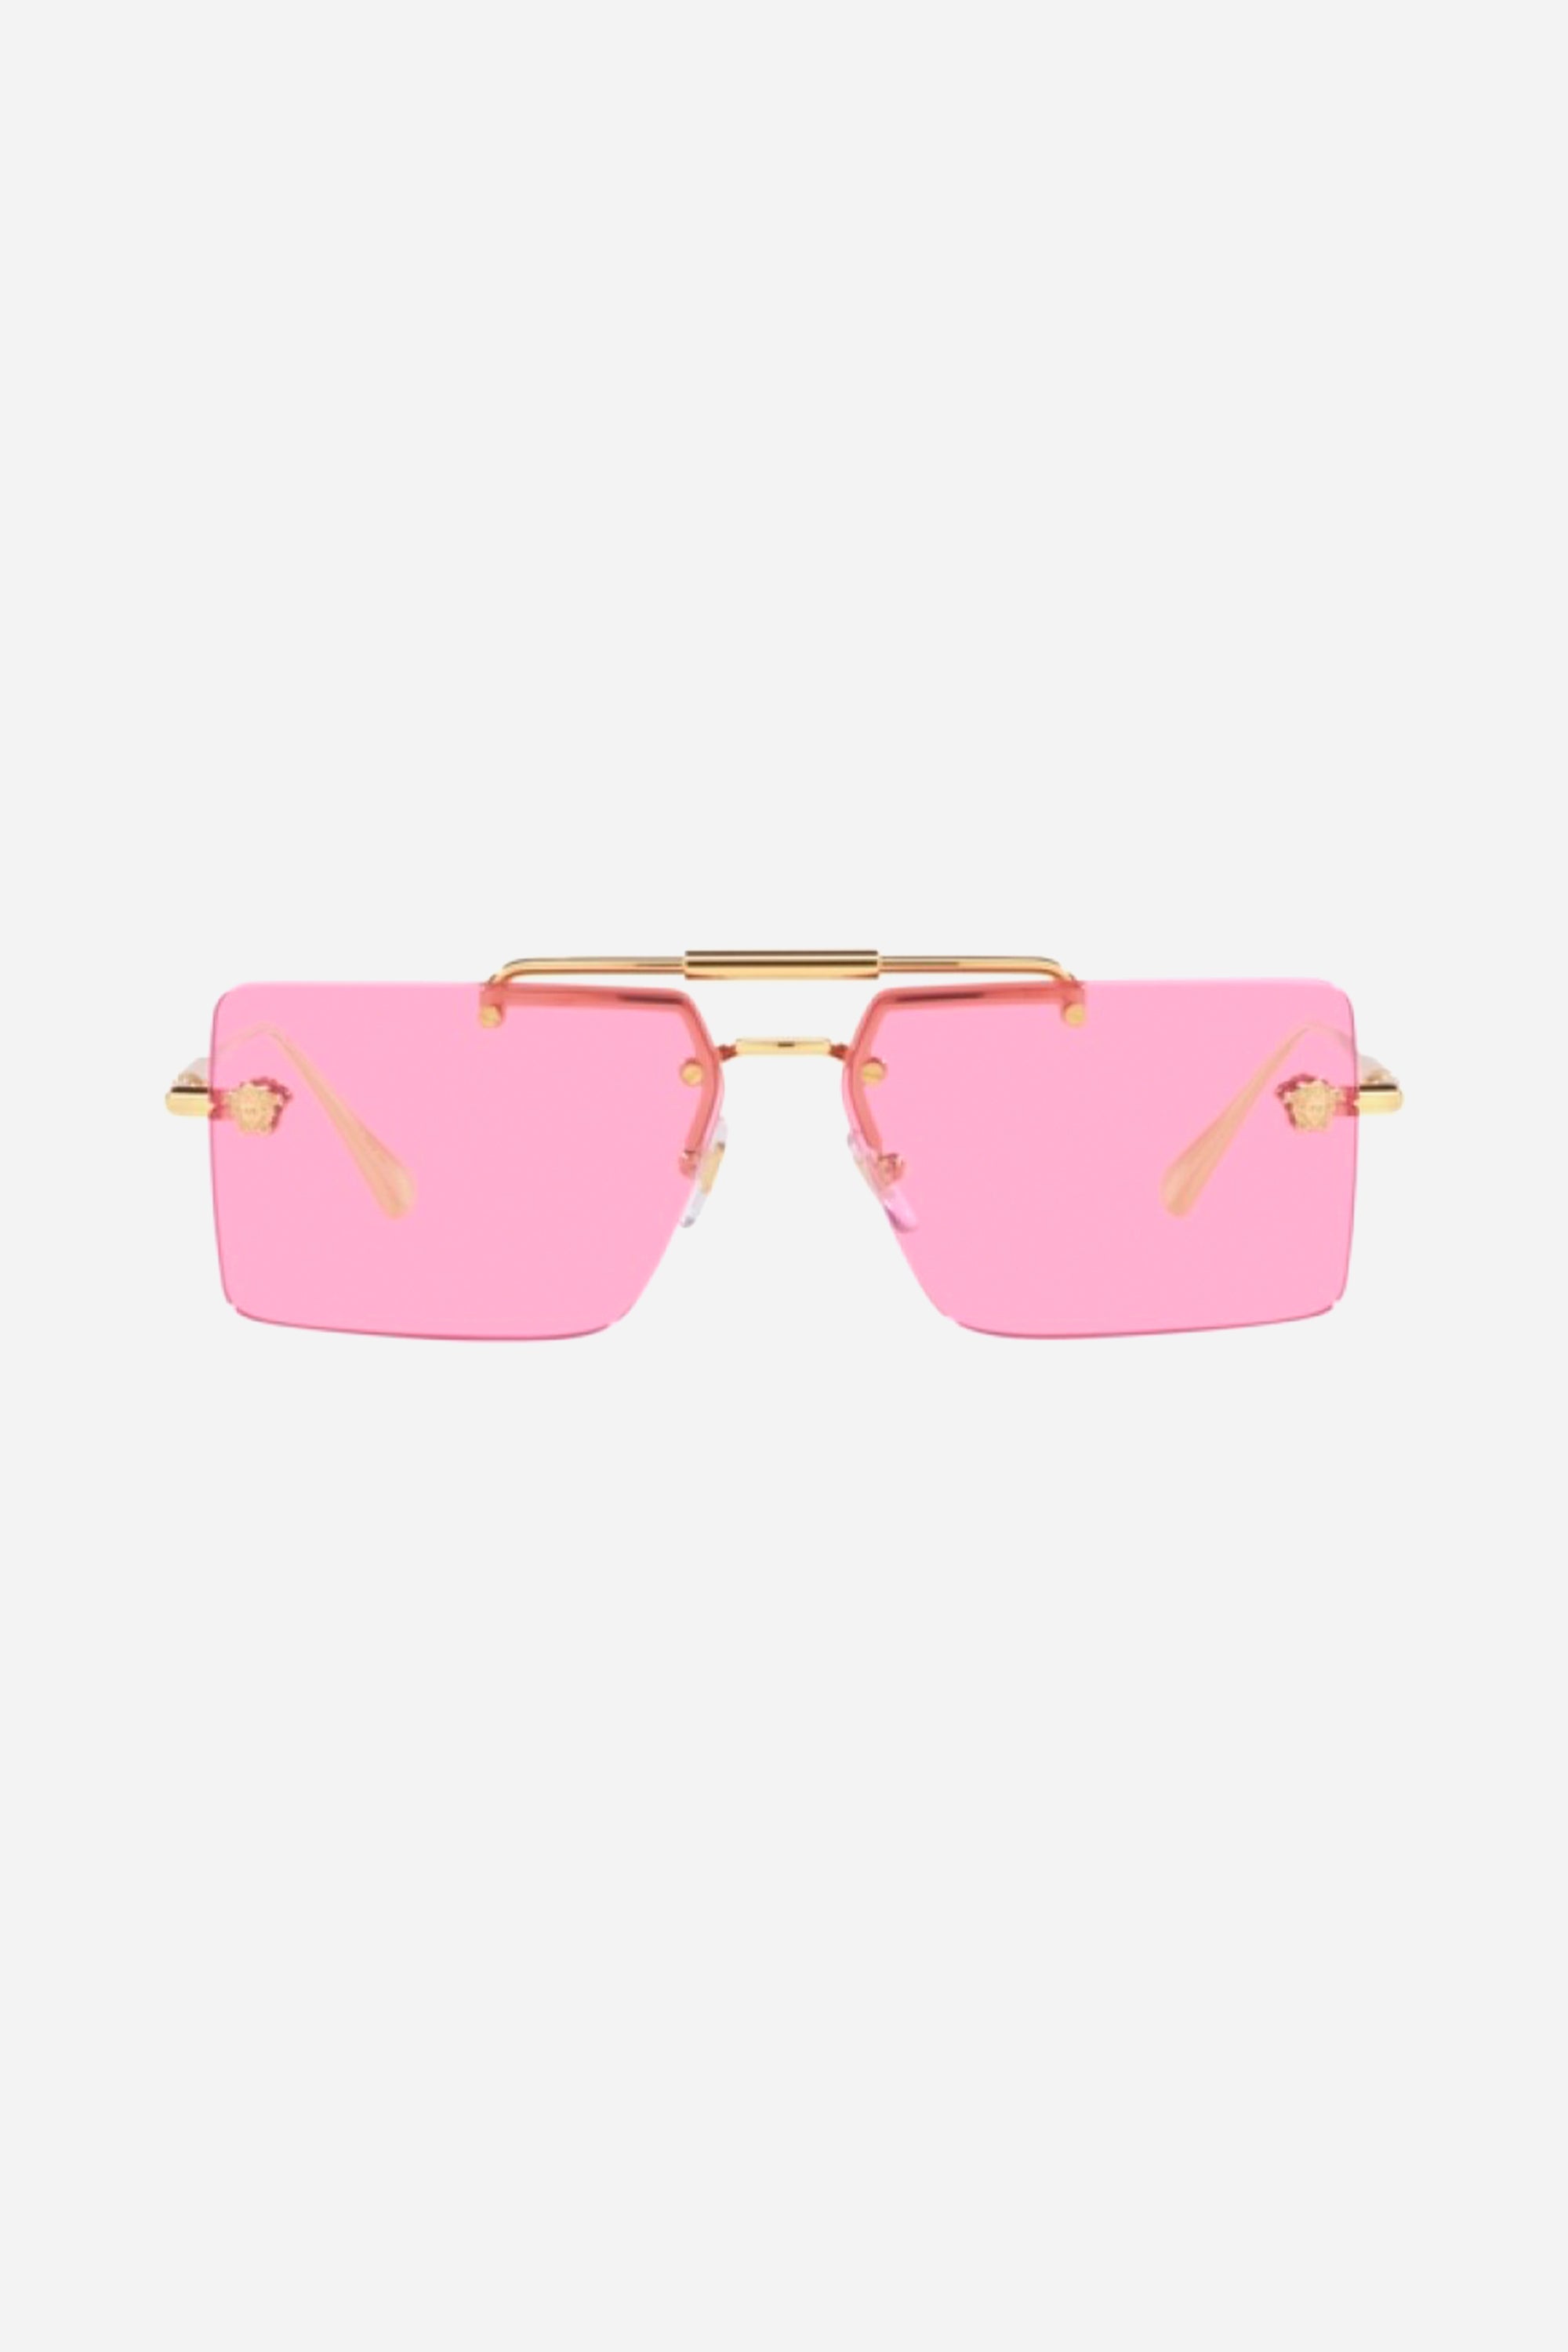 Versace squared pink sunglasses featuring iconic jellyfish - Eyewear Club